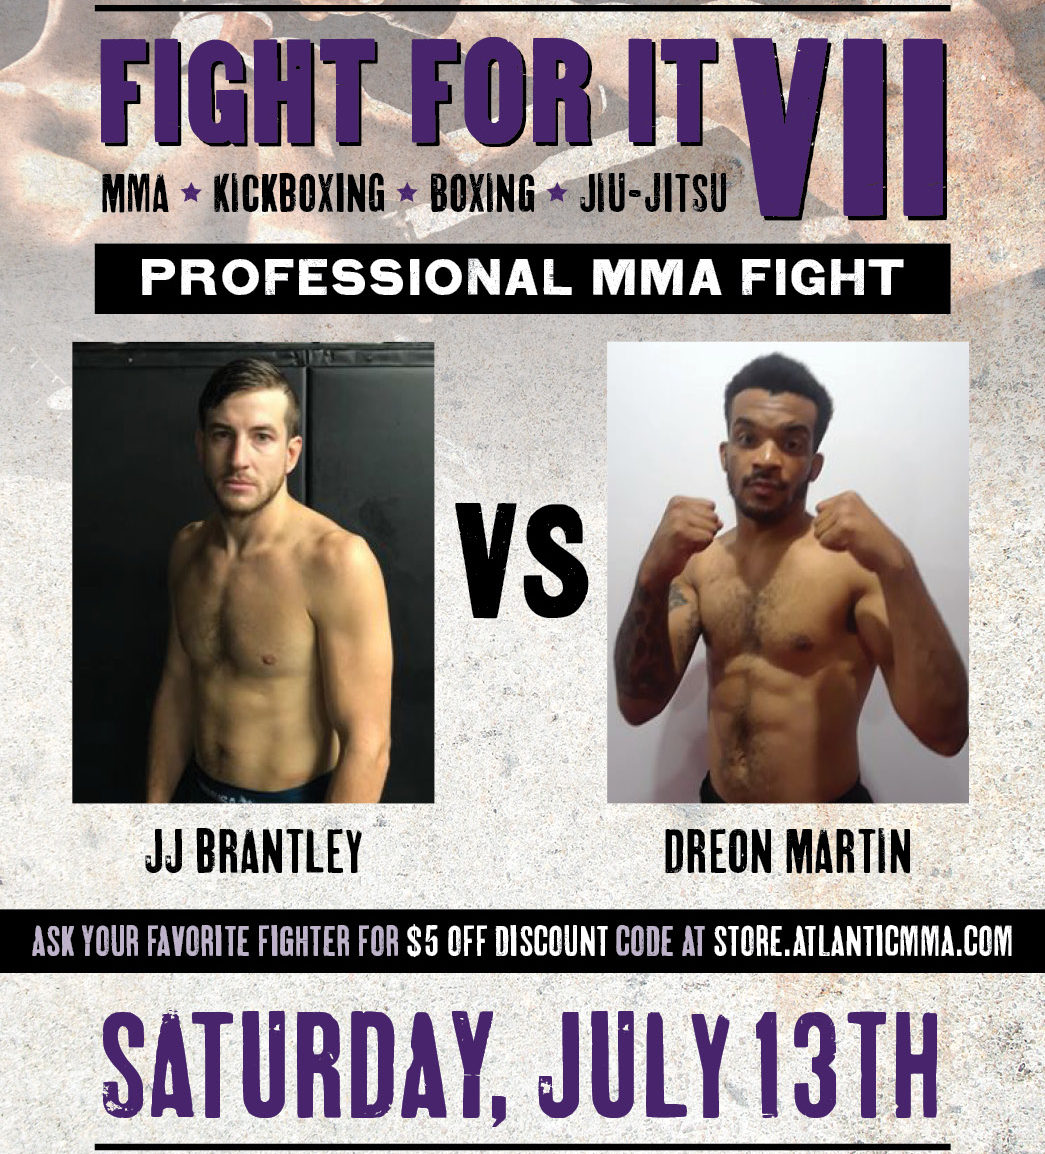 Former Amateur Champion JJ Brantley to make Pro Debut vs Martin at Fight for It 7